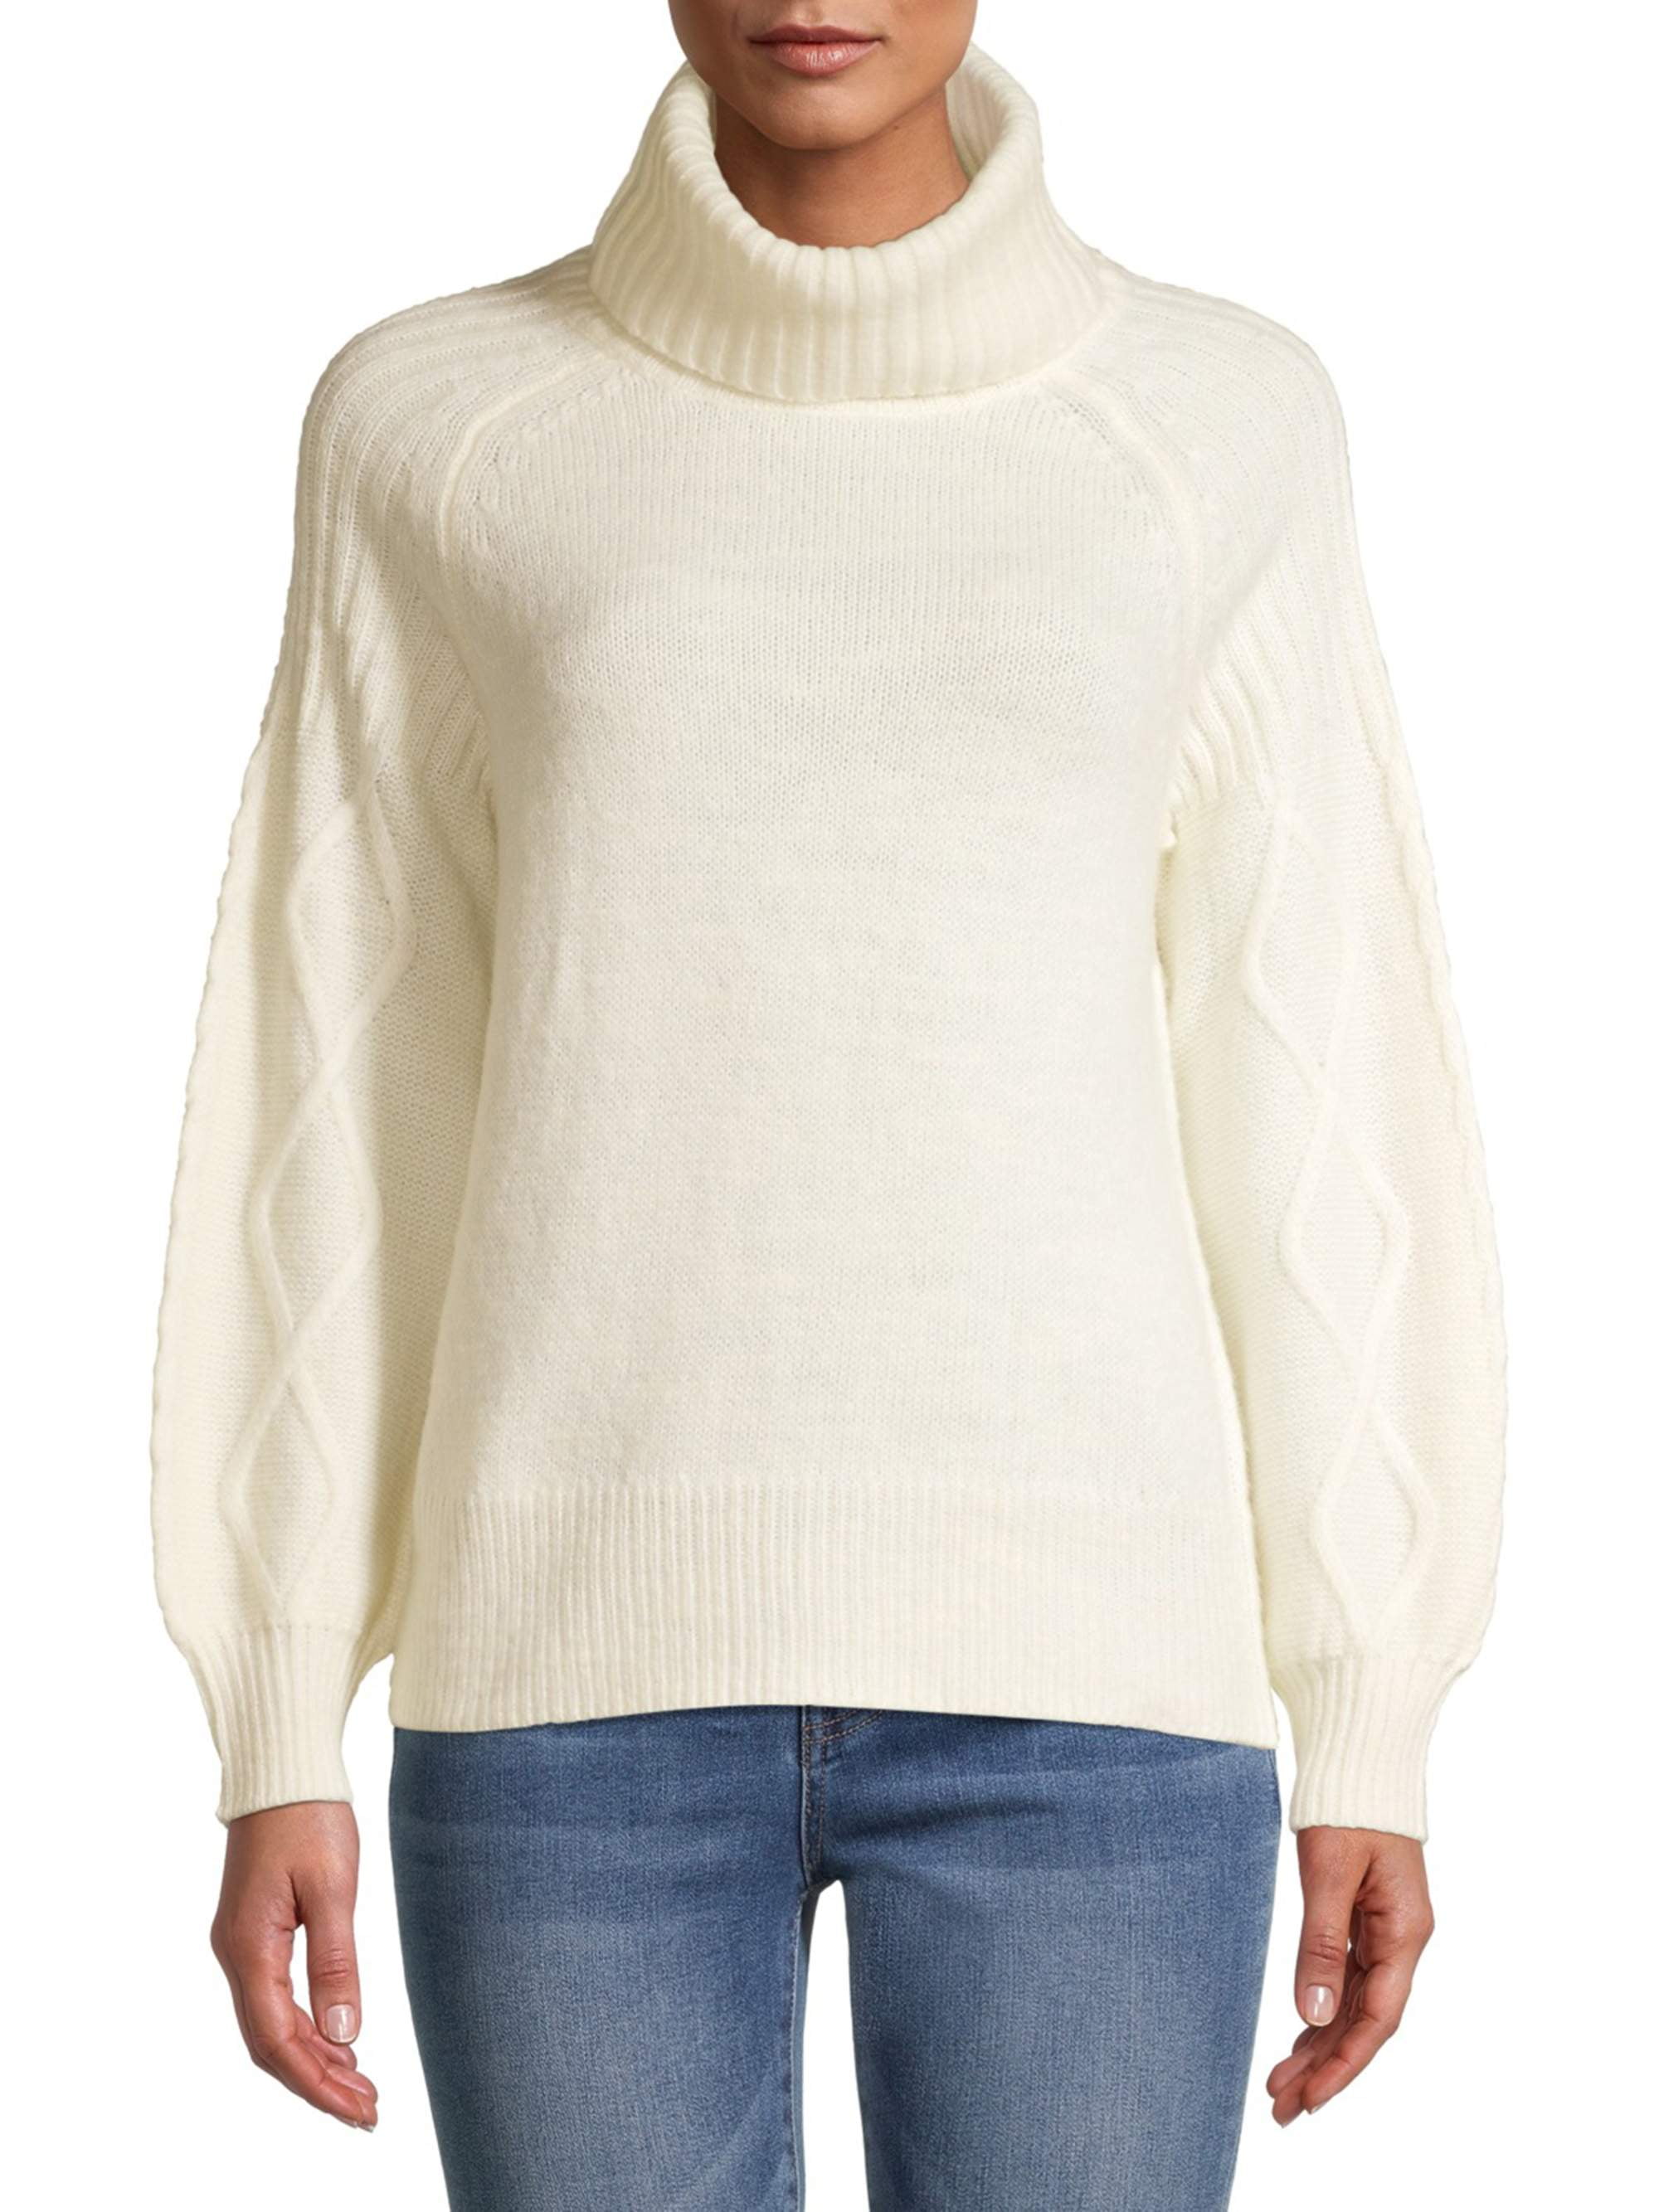 Heart N Crush Women's Cable Sleeve Raglan Turtleneck Sweater - Walmart.com